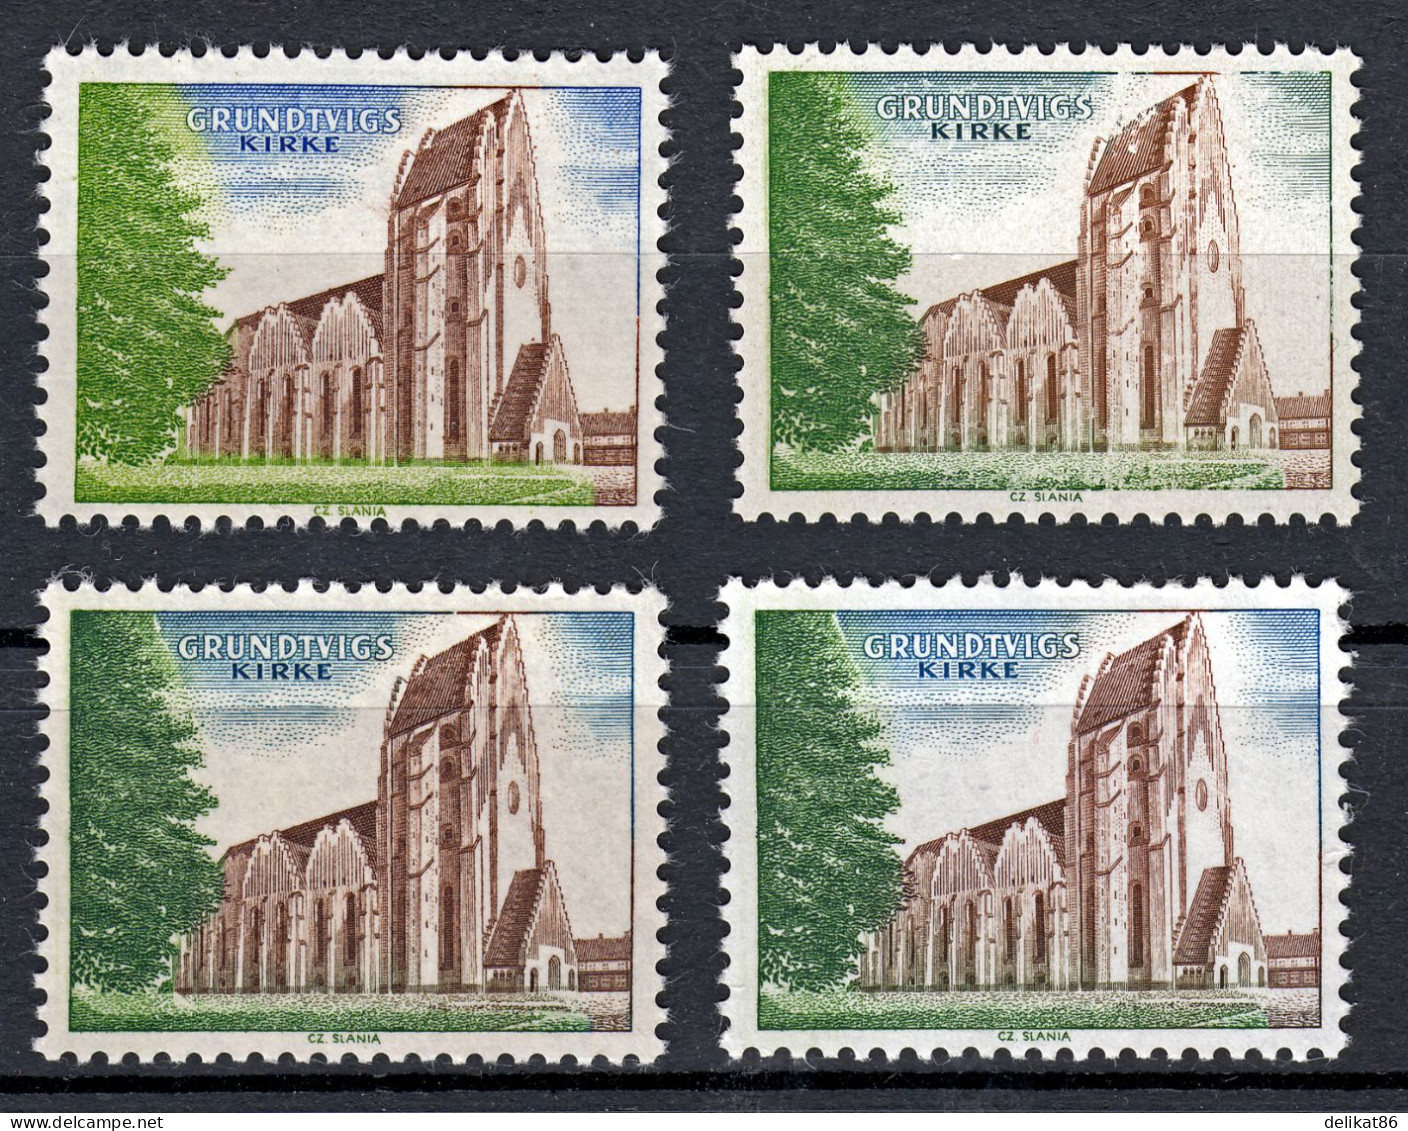 Probedruck Test Stamp Specimen Prøve Grundtvig Kirke Slania 1968   4 Verschiedene Marken - Proofs & Reprints